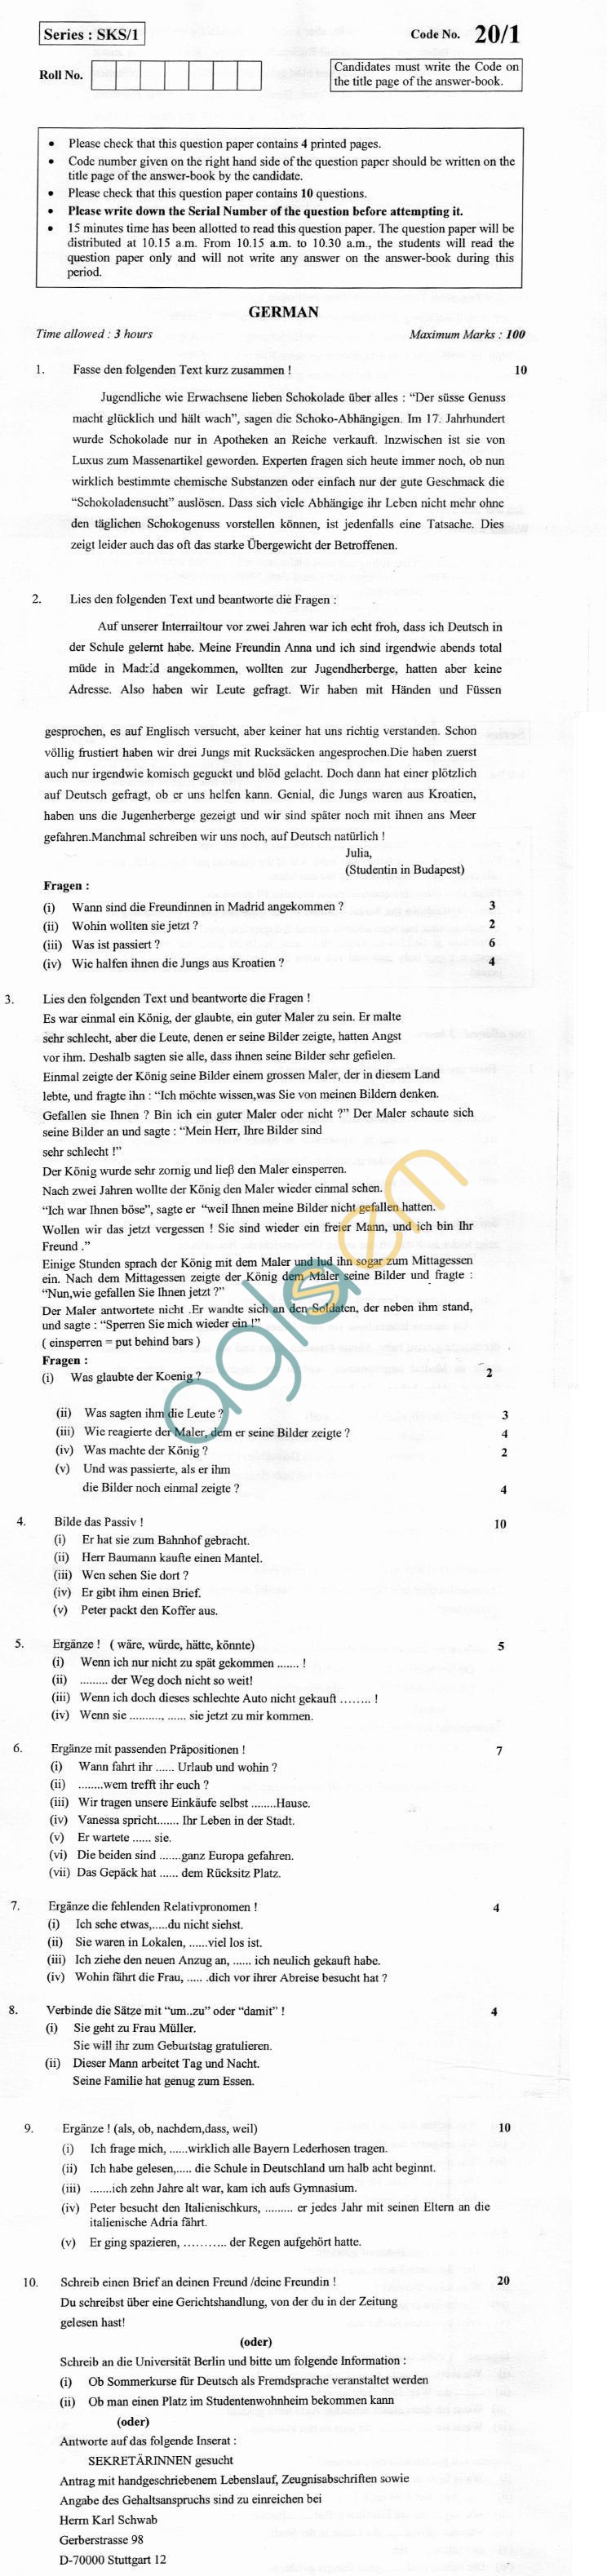 CBSE Board Exam 2013 Class XII Question Paper - German